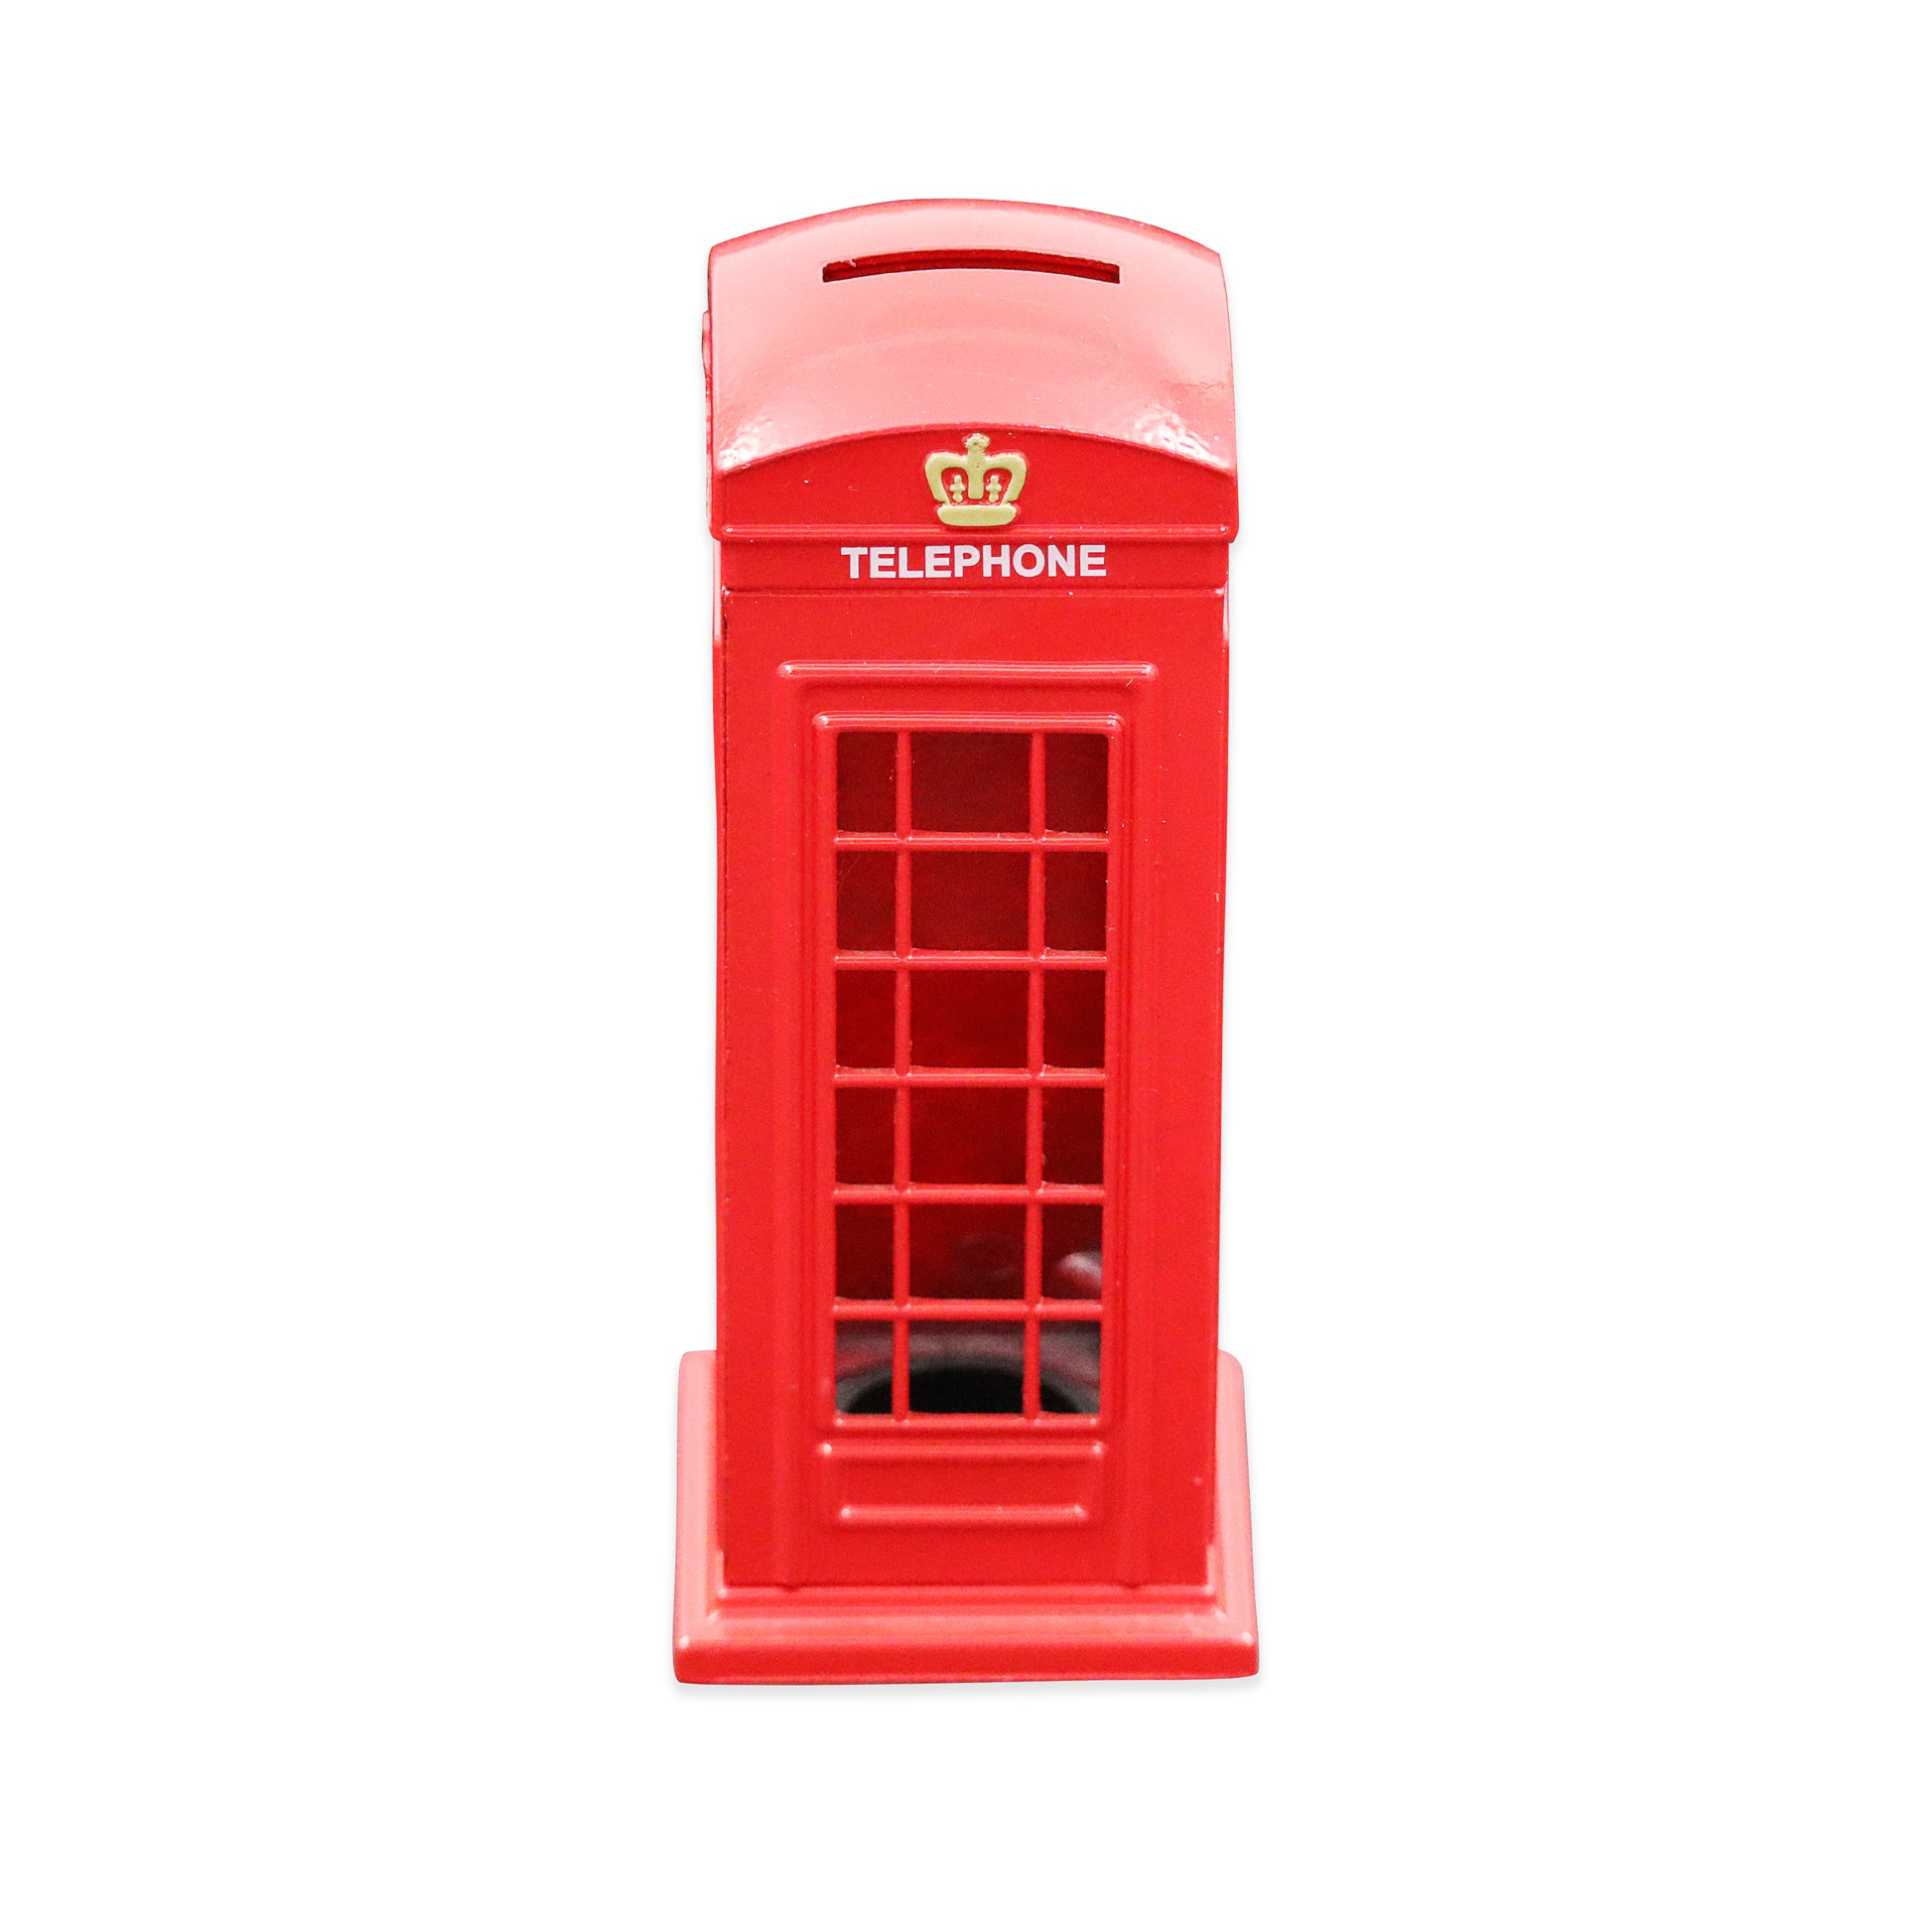 Red telephone box souvenir money bank piggy bank